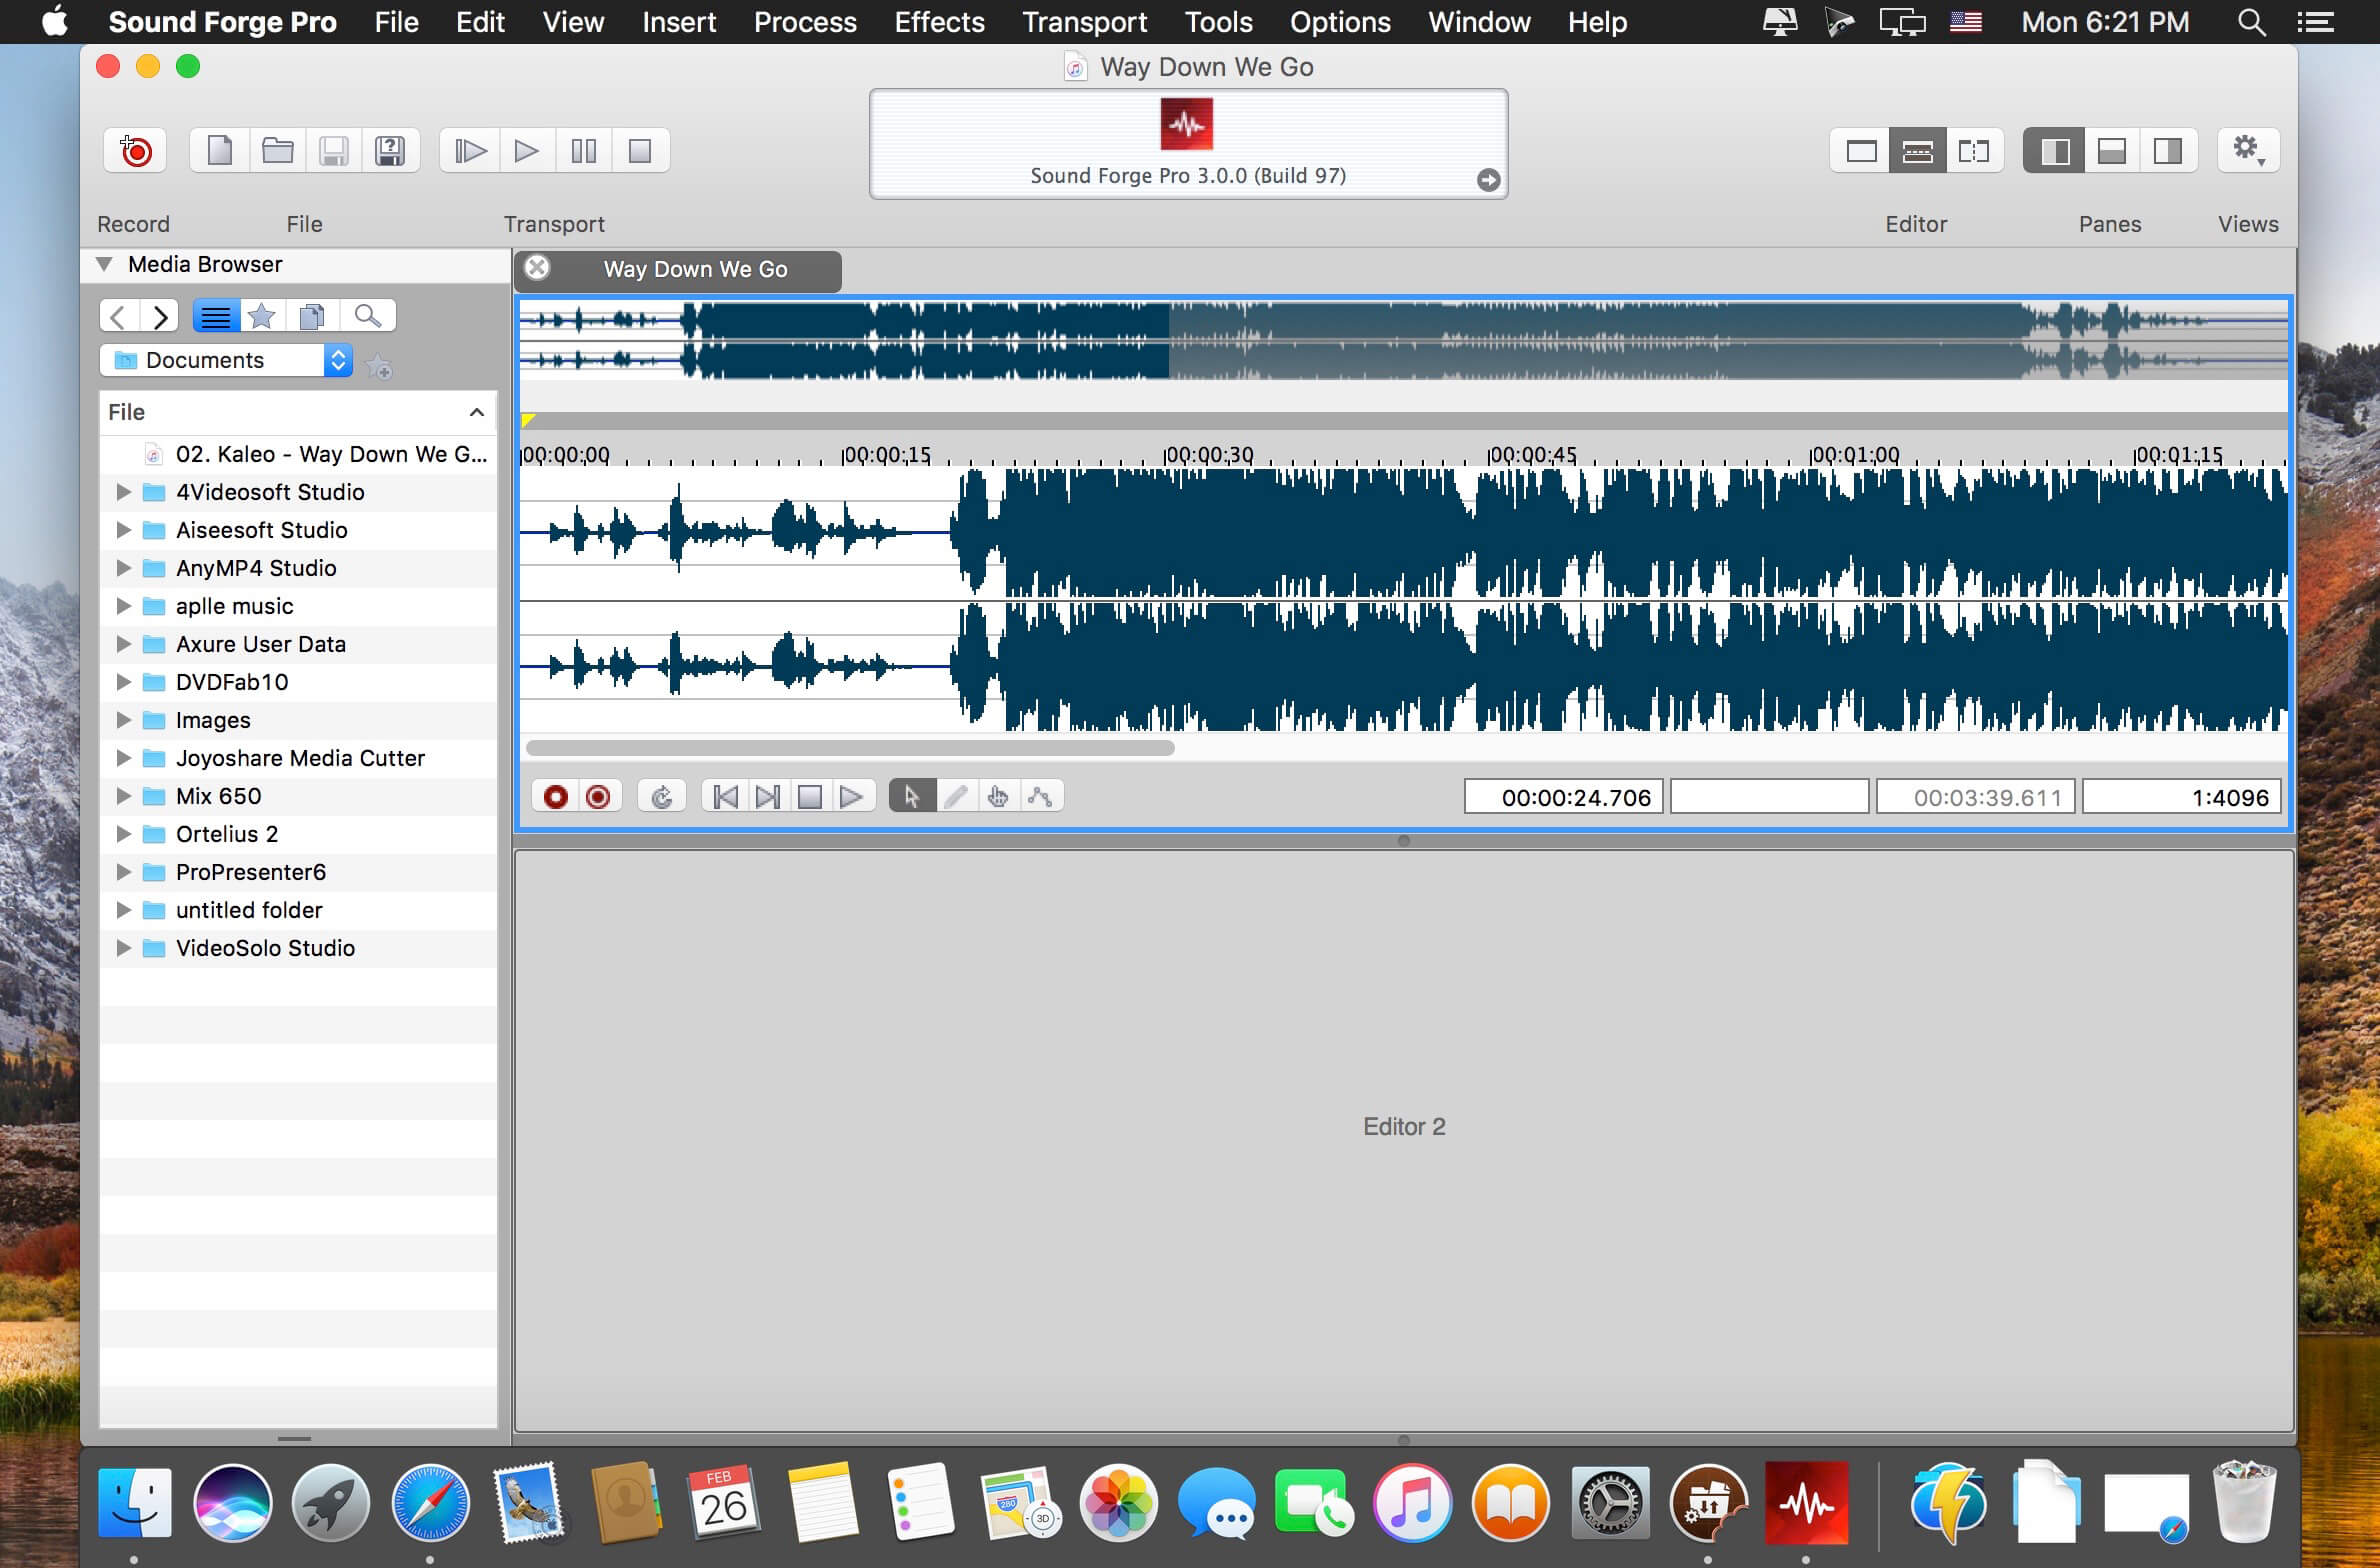 sound forge pro 13 mac download torrent